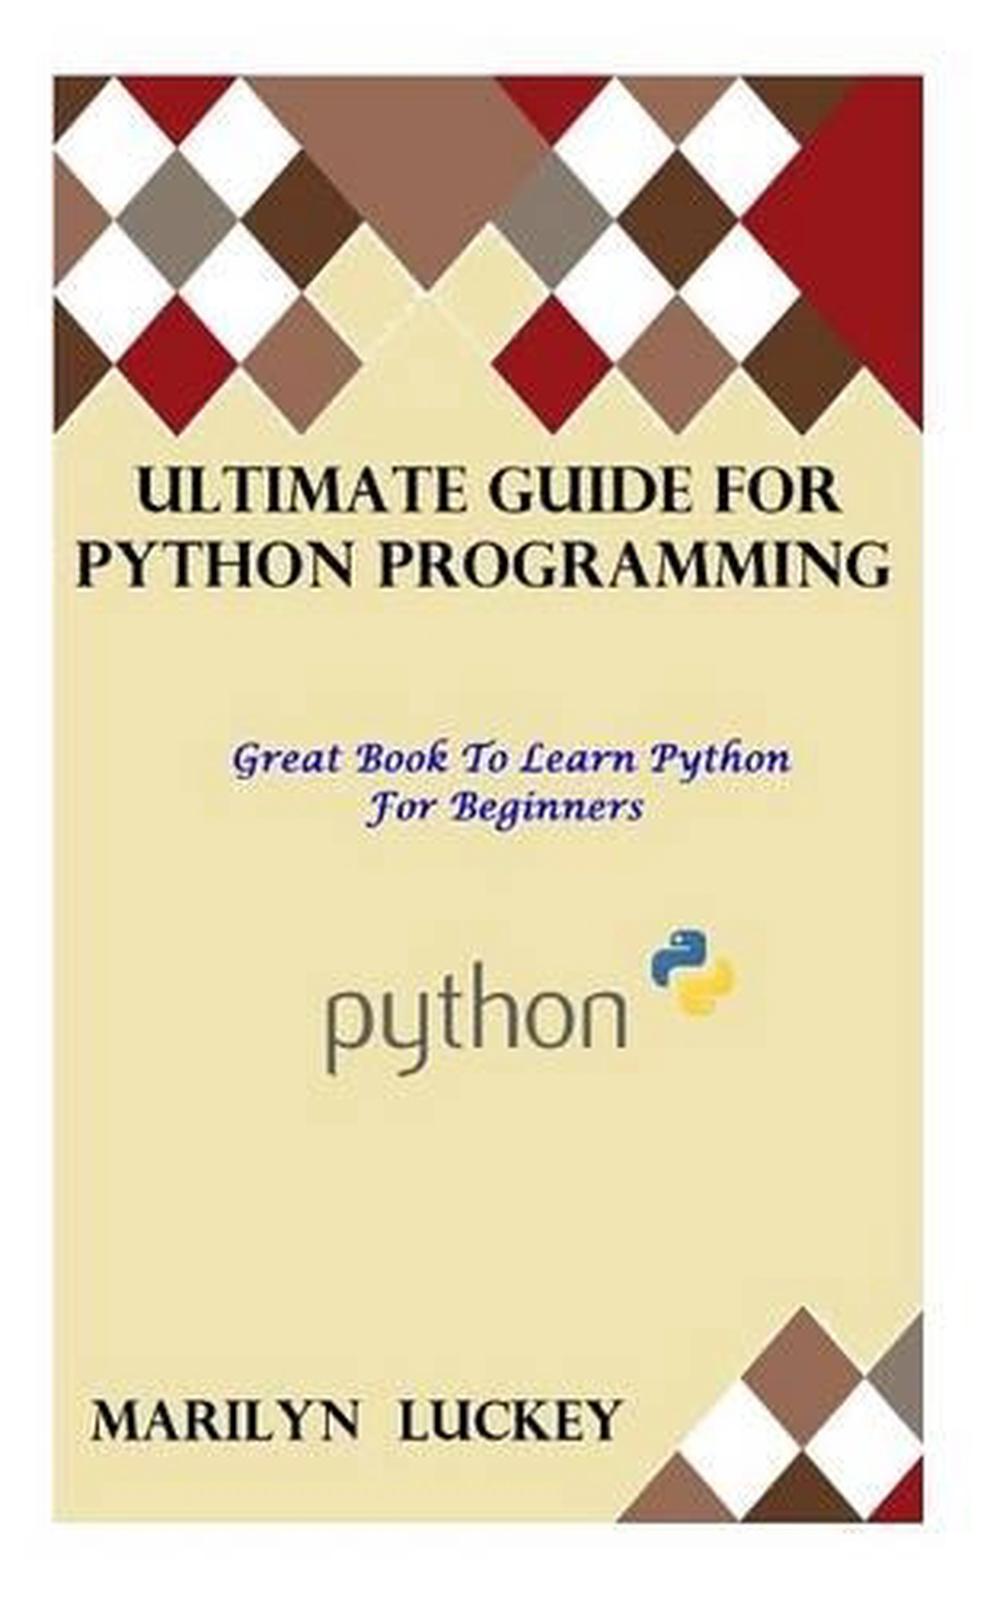 Great program. Programmer for Python book. Programming in Python book. Learn to program with Python book. Python Learning book Georgia.